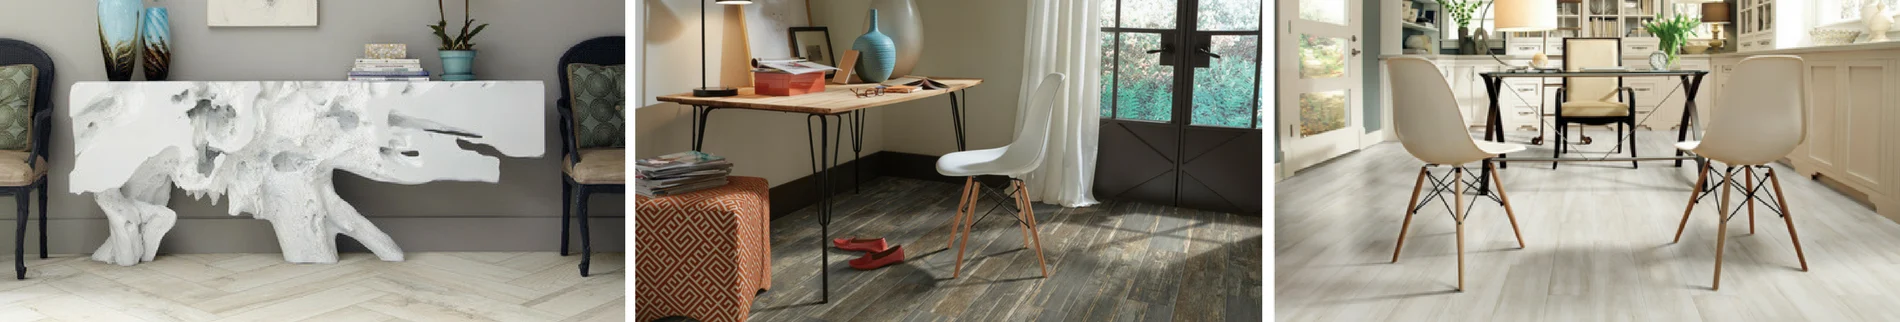 wood look laminate flooring in den with modern furniture